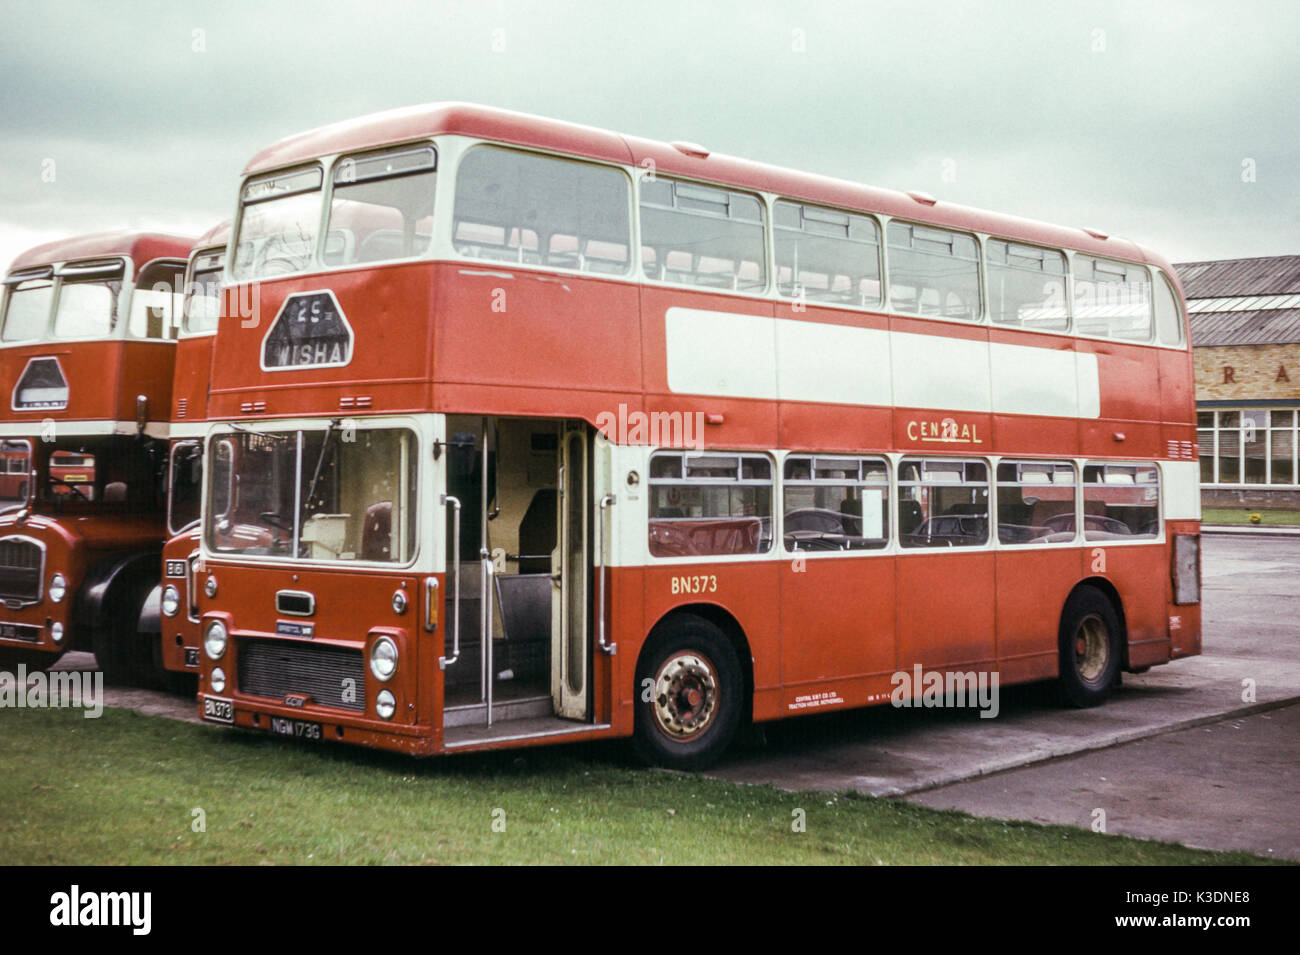 Escocia, Reino Unido - 1973: Vintage imagen de autobuses operan en 1973. SMT Central Bristol VRT SL6G/flota ECW No. MN373 (registro NGM 173G). Foto de stock